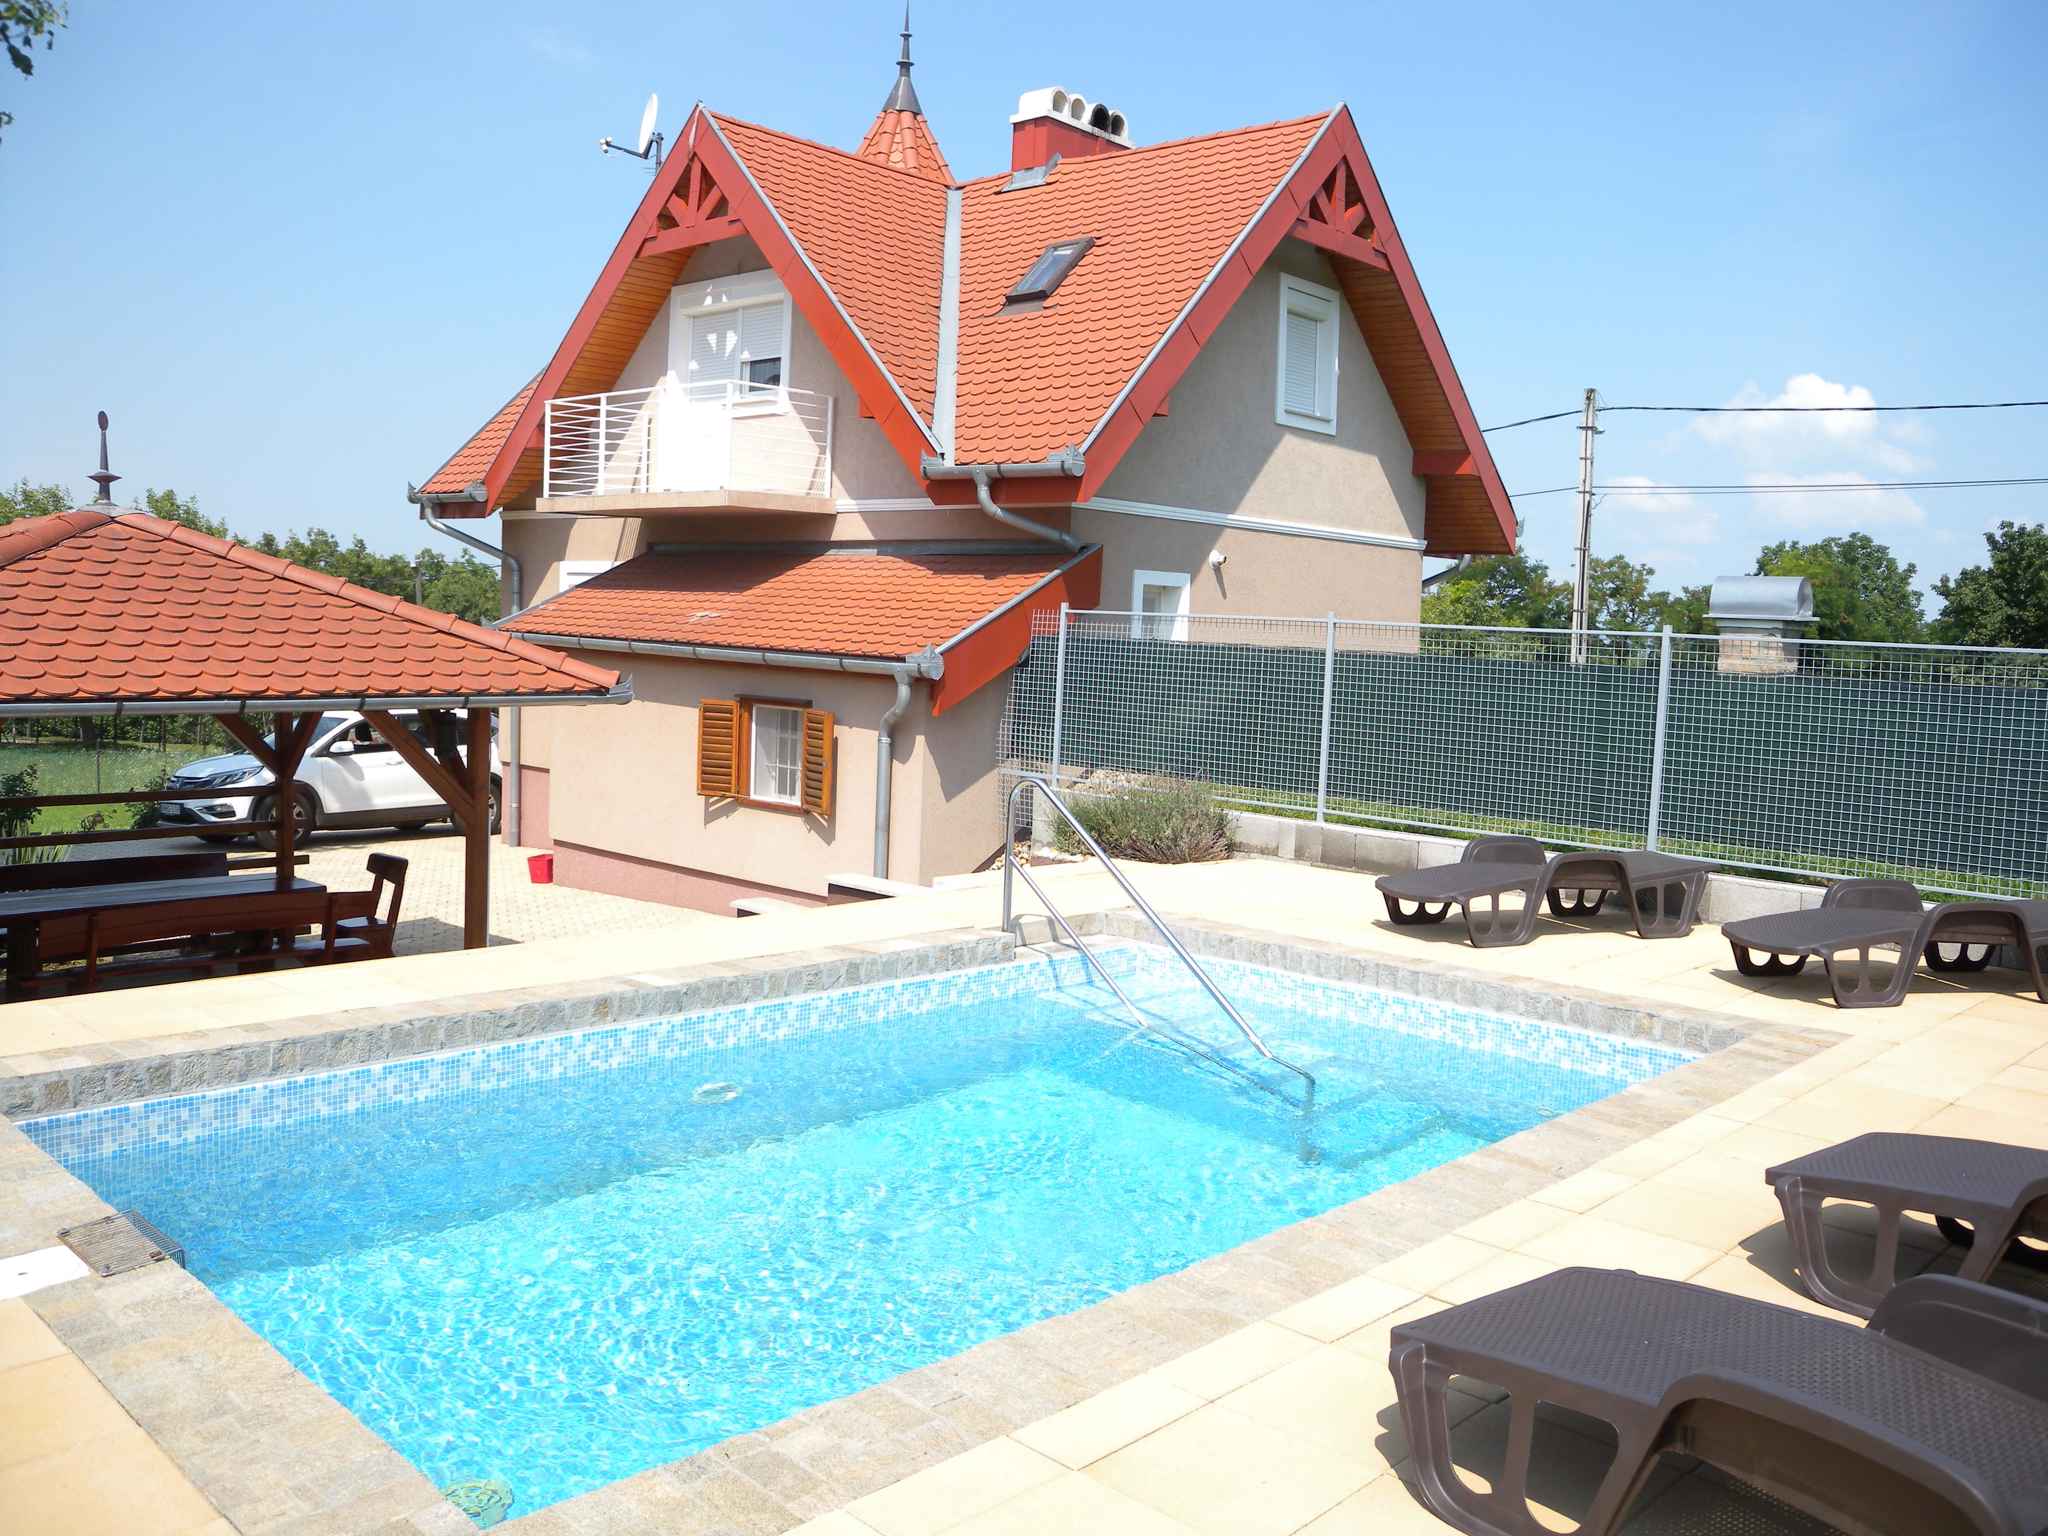 Ferienhaus mit Panorama blick und Pool Ferienhaus in Ungarn